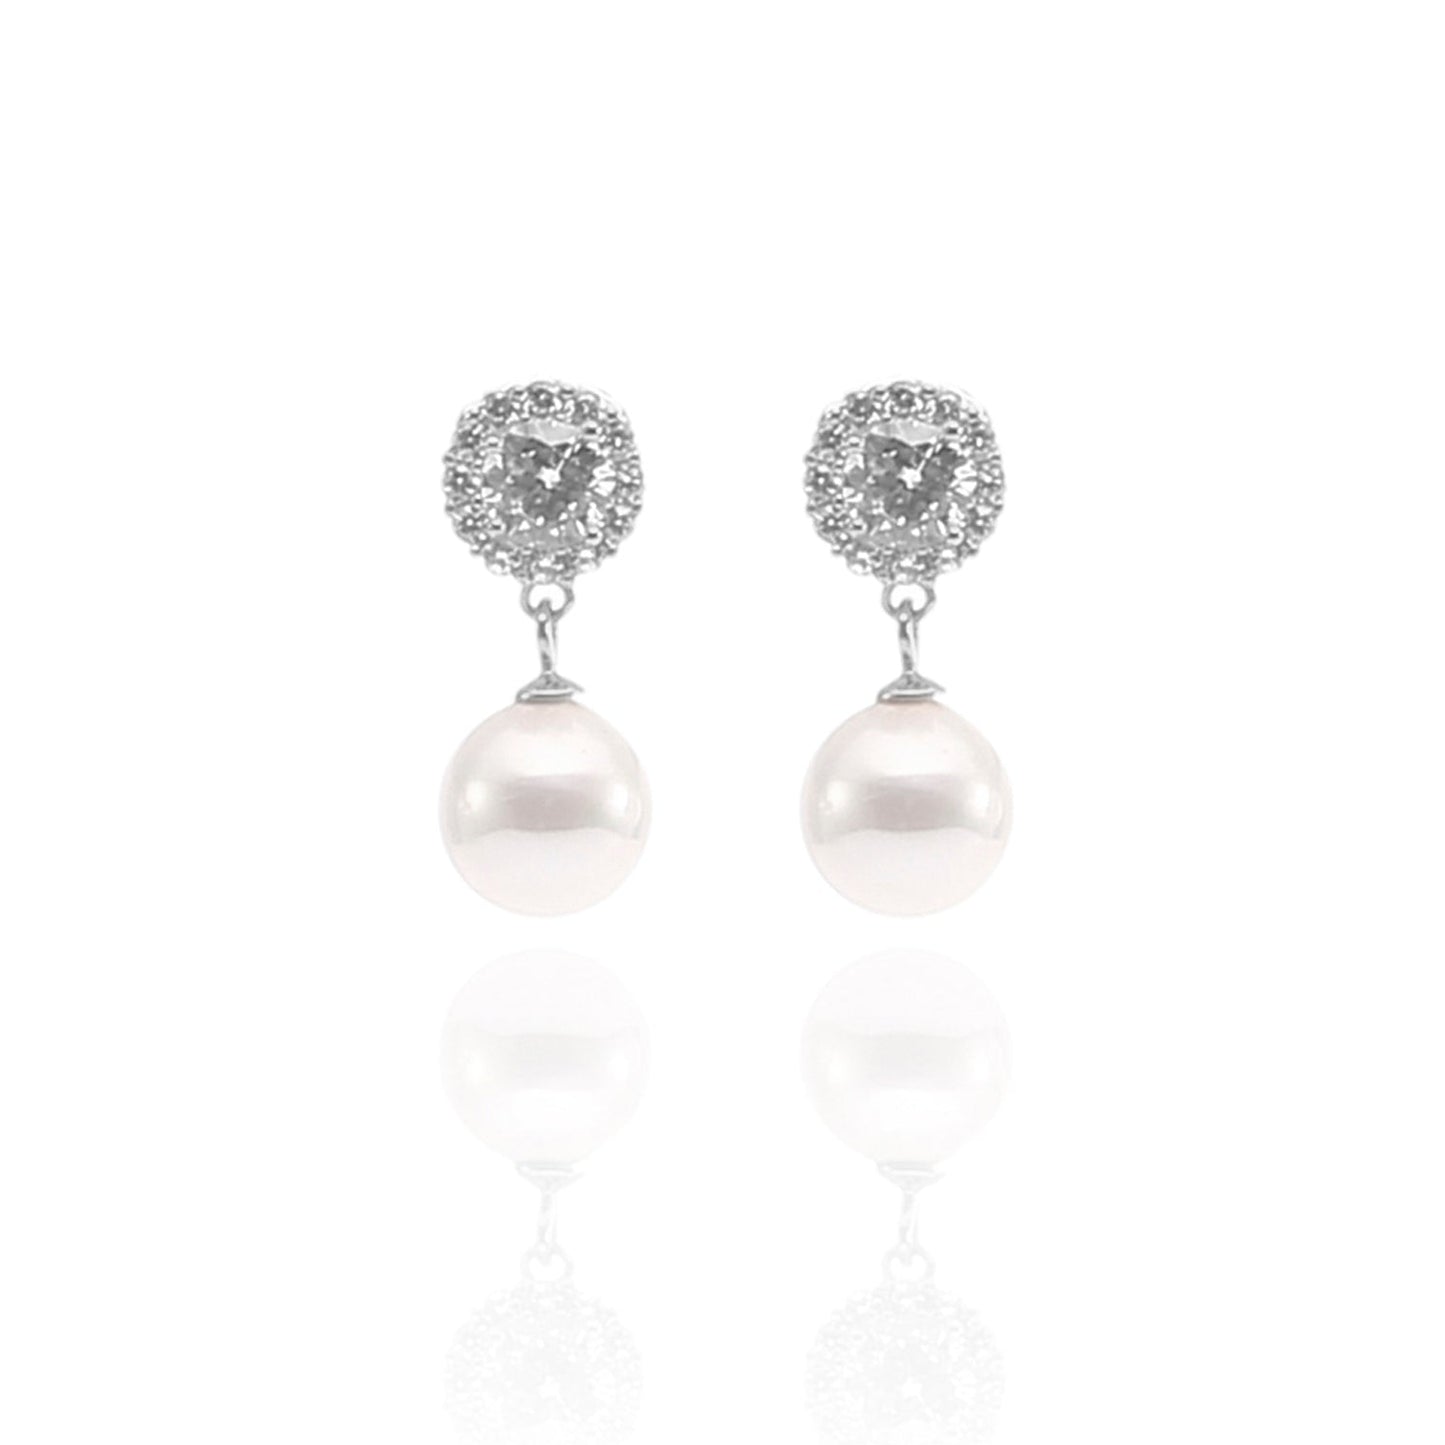 Pearl Teardrop Pendant Necklace and Earrings Set - ARJW1027RD ARCADIO